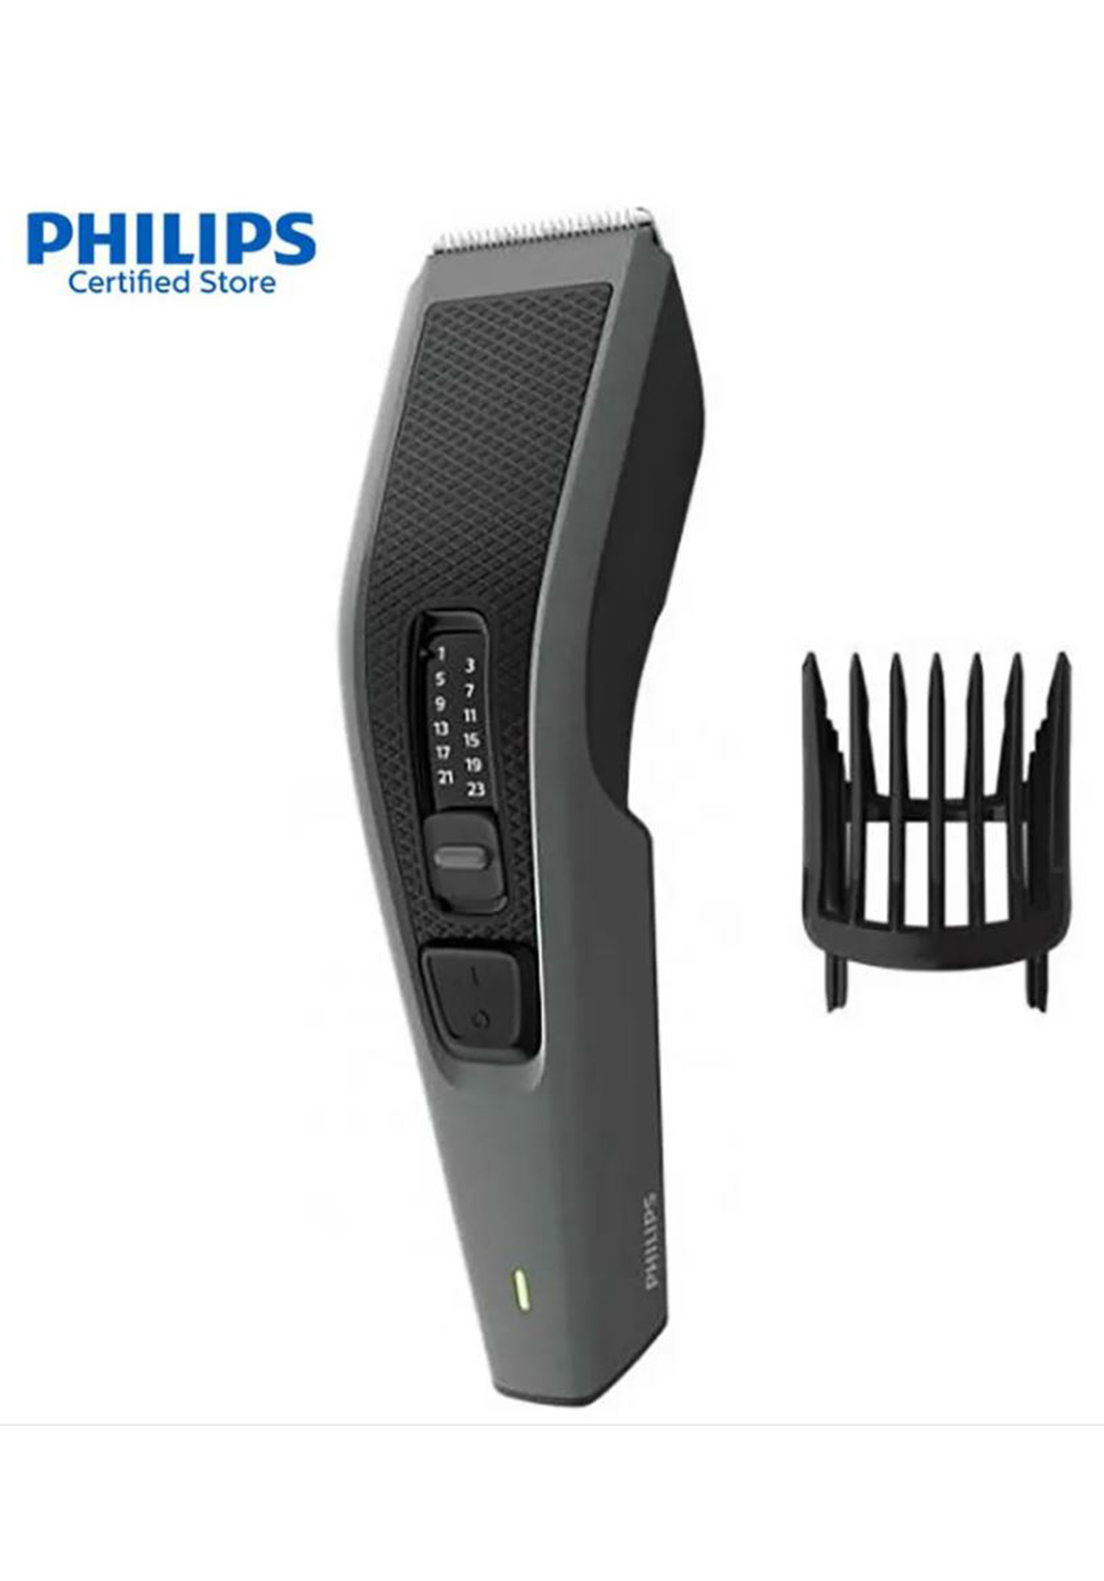 Philips HC3520 Hair Clipper Trimmer: 